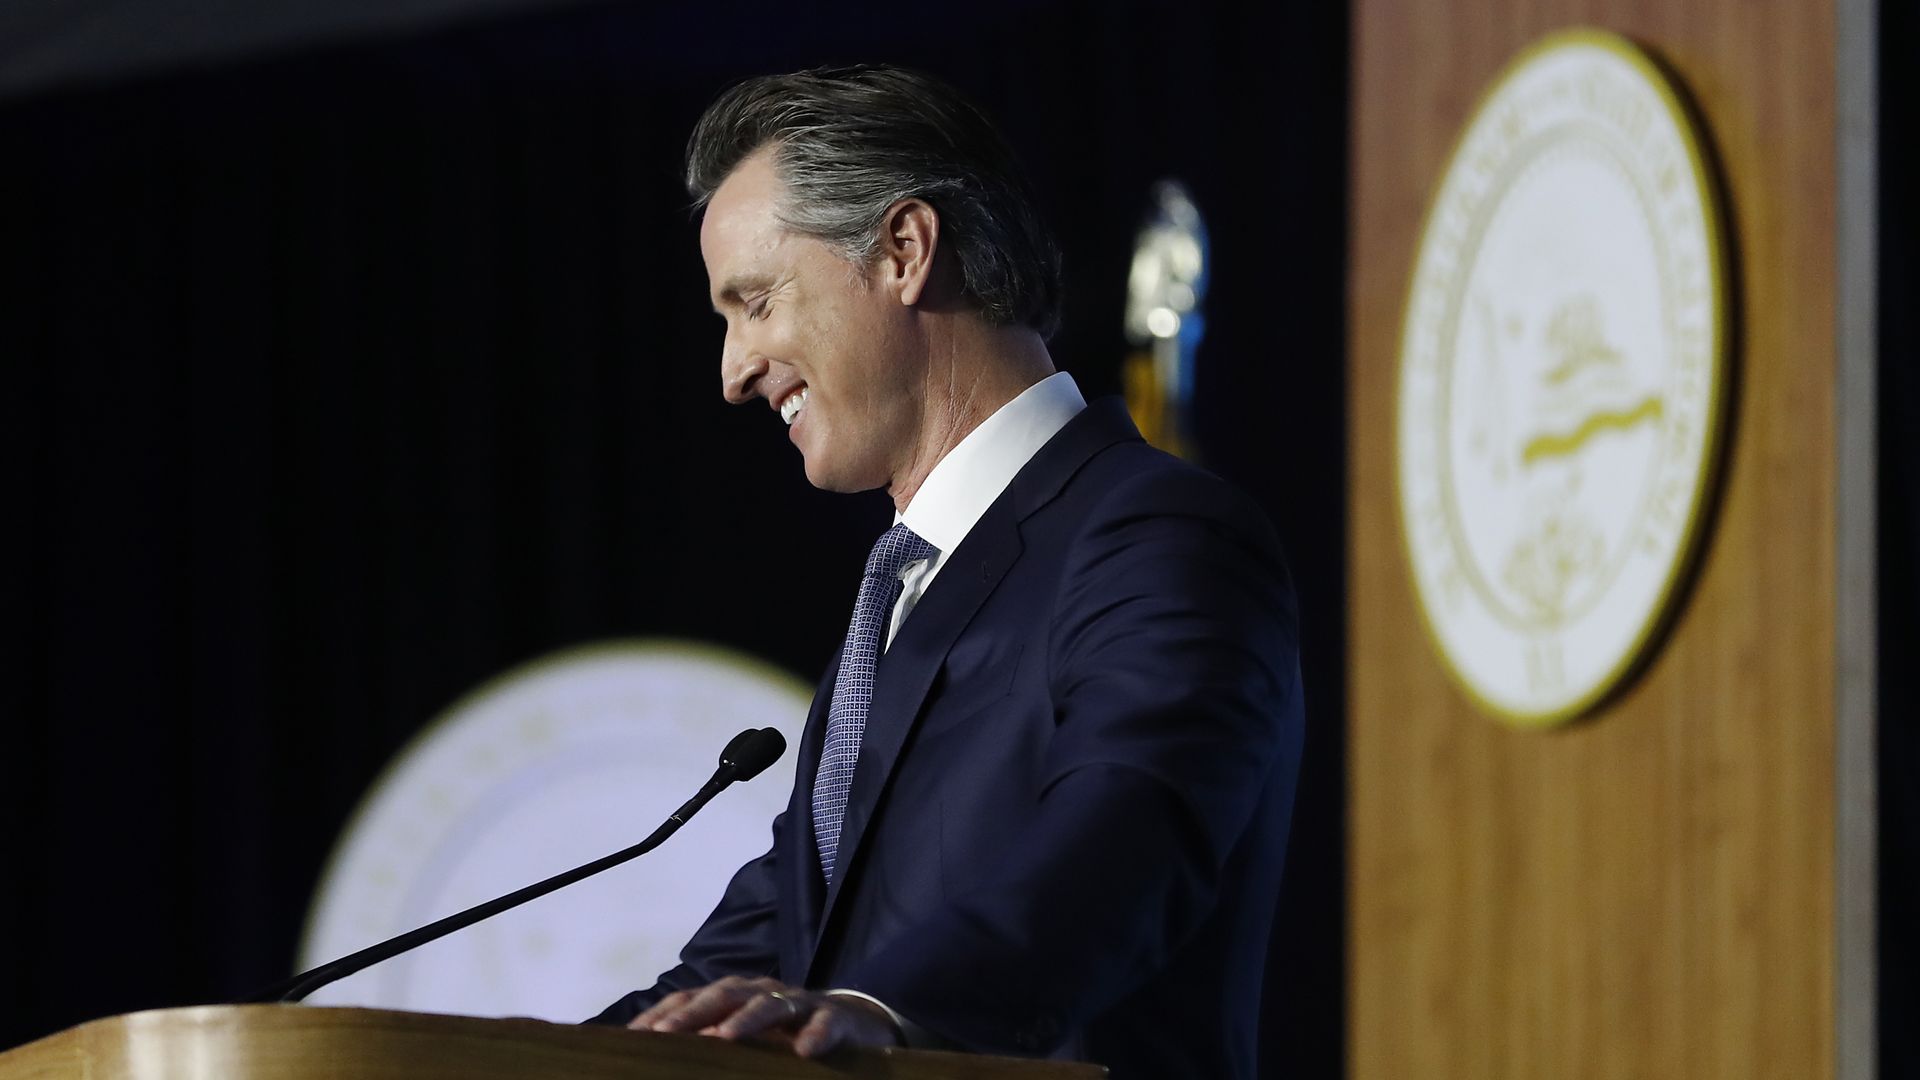 California Gov. Gavin Newsom gives his inaugural speech